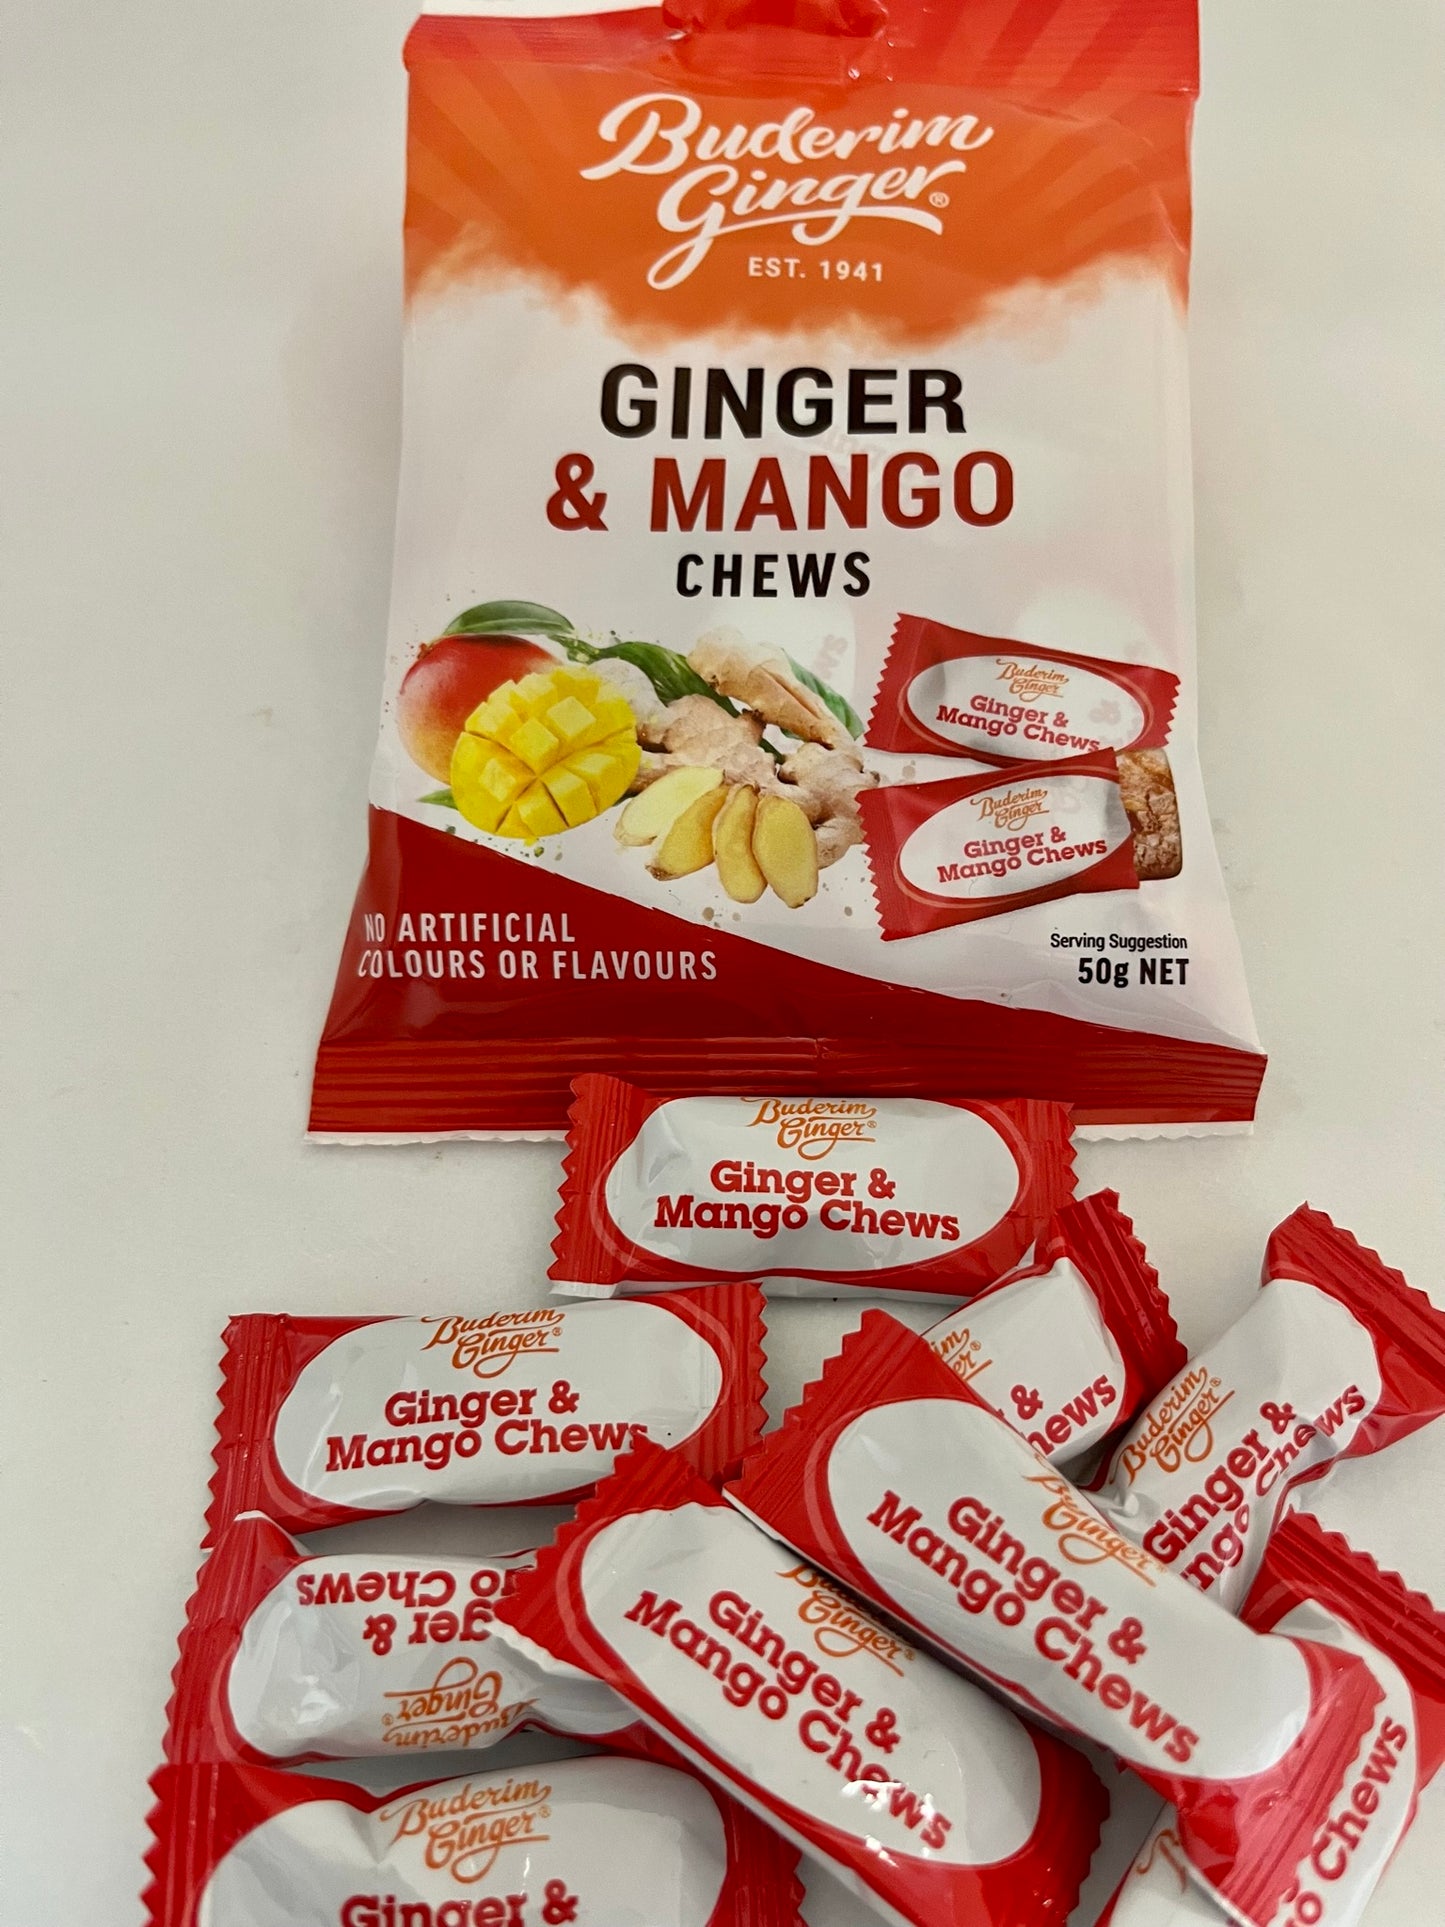 Buderim Ginger Chews - Ginger & Mango 50g